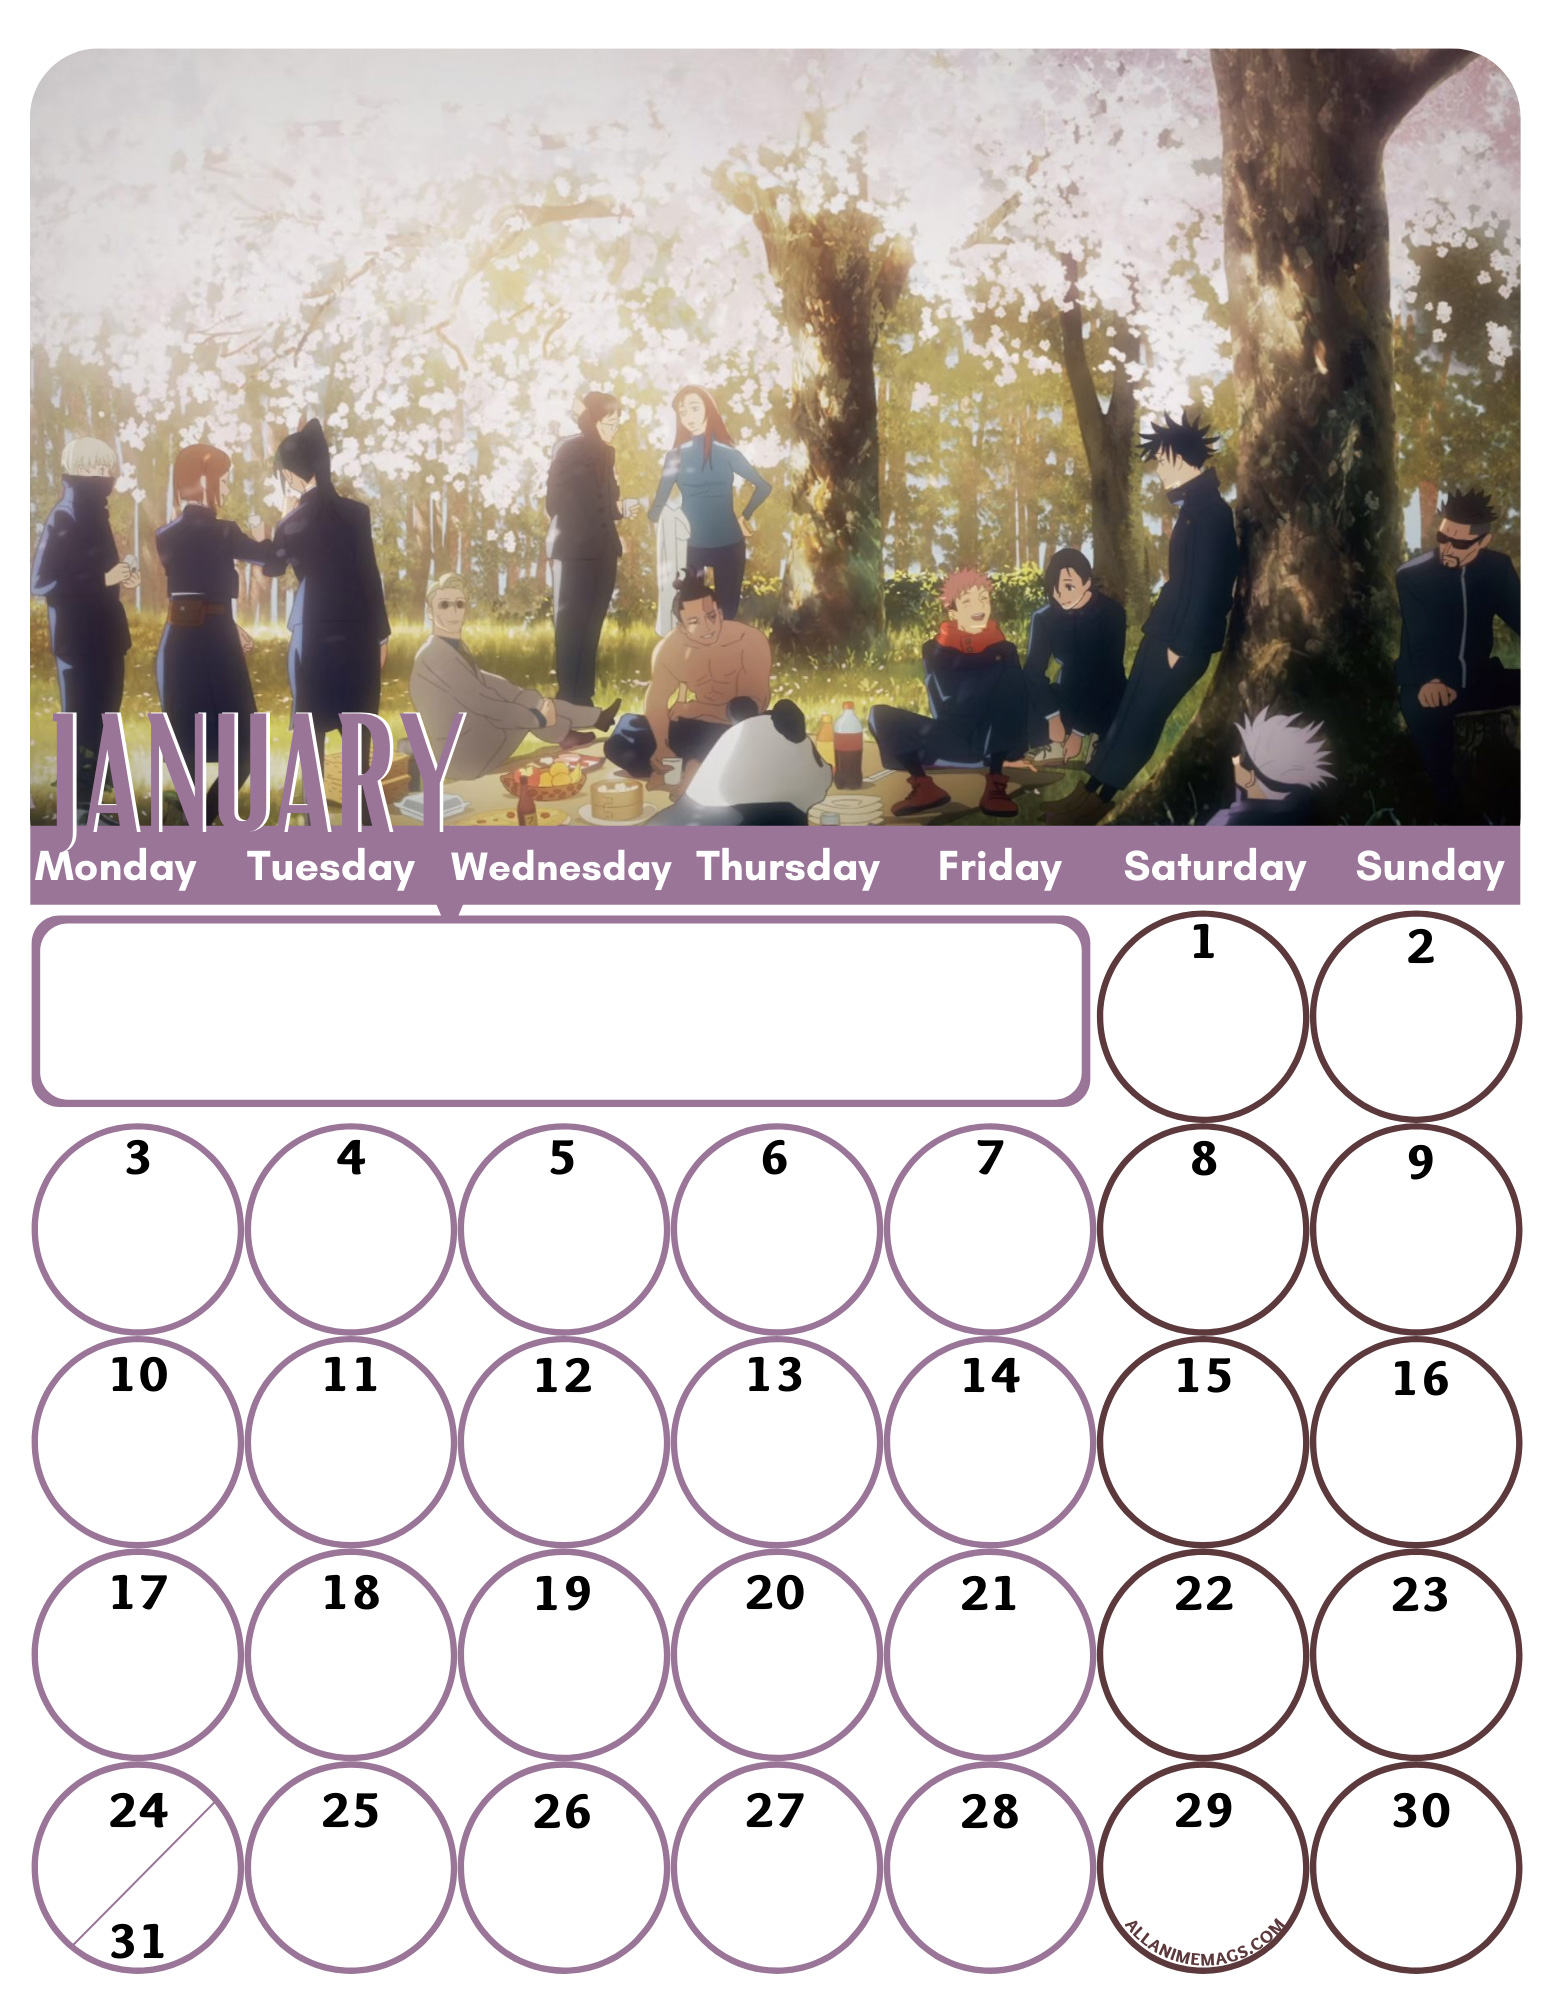 01-January-Jujutsu-Kaisen-Anime-Wall-Calendar-2022-AllAnimeMag